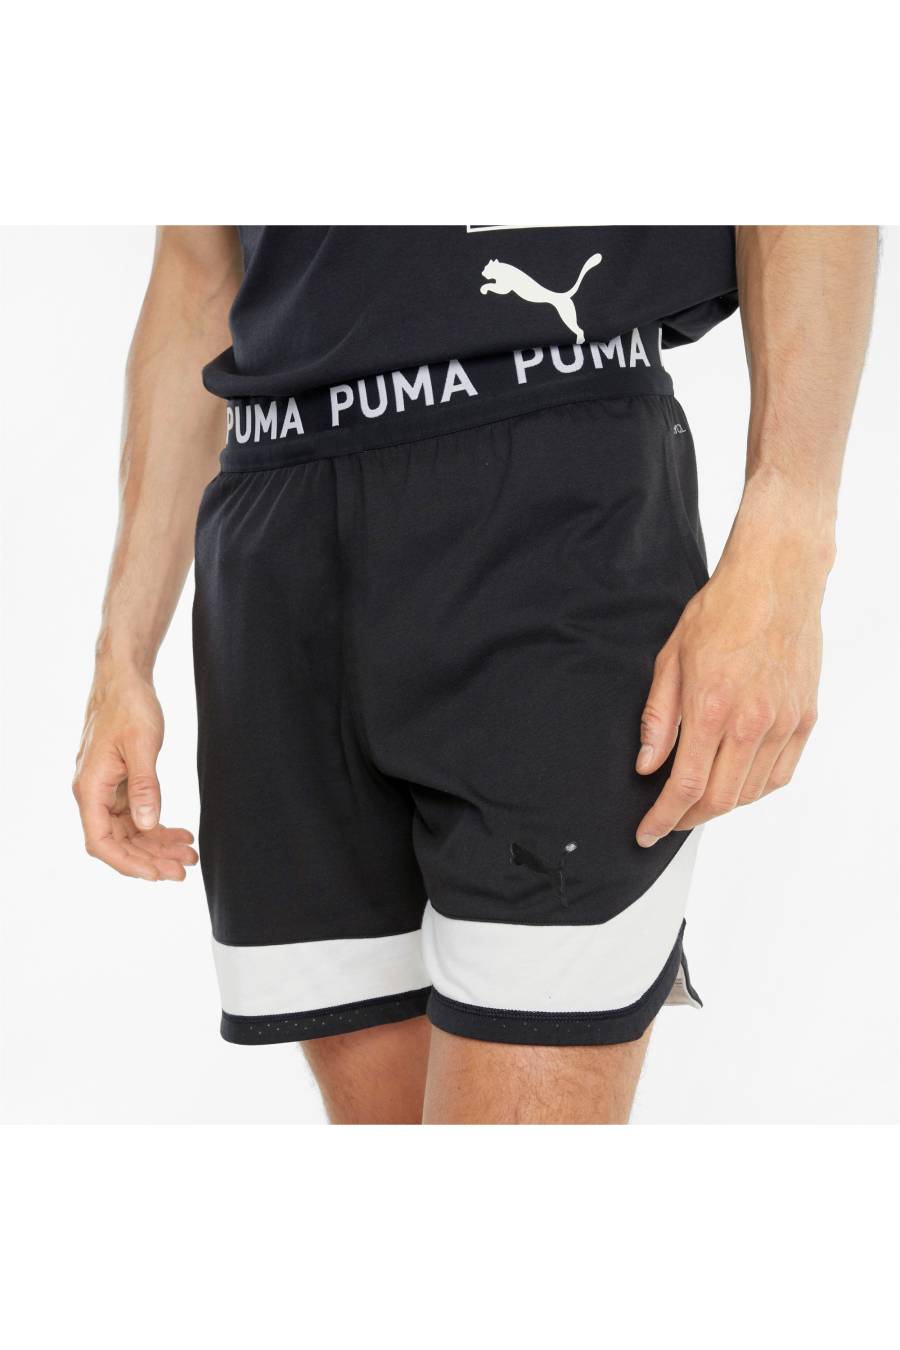 Shorts Puma Train Vent Knit SHO Black  - Msdsport by Masdeporte